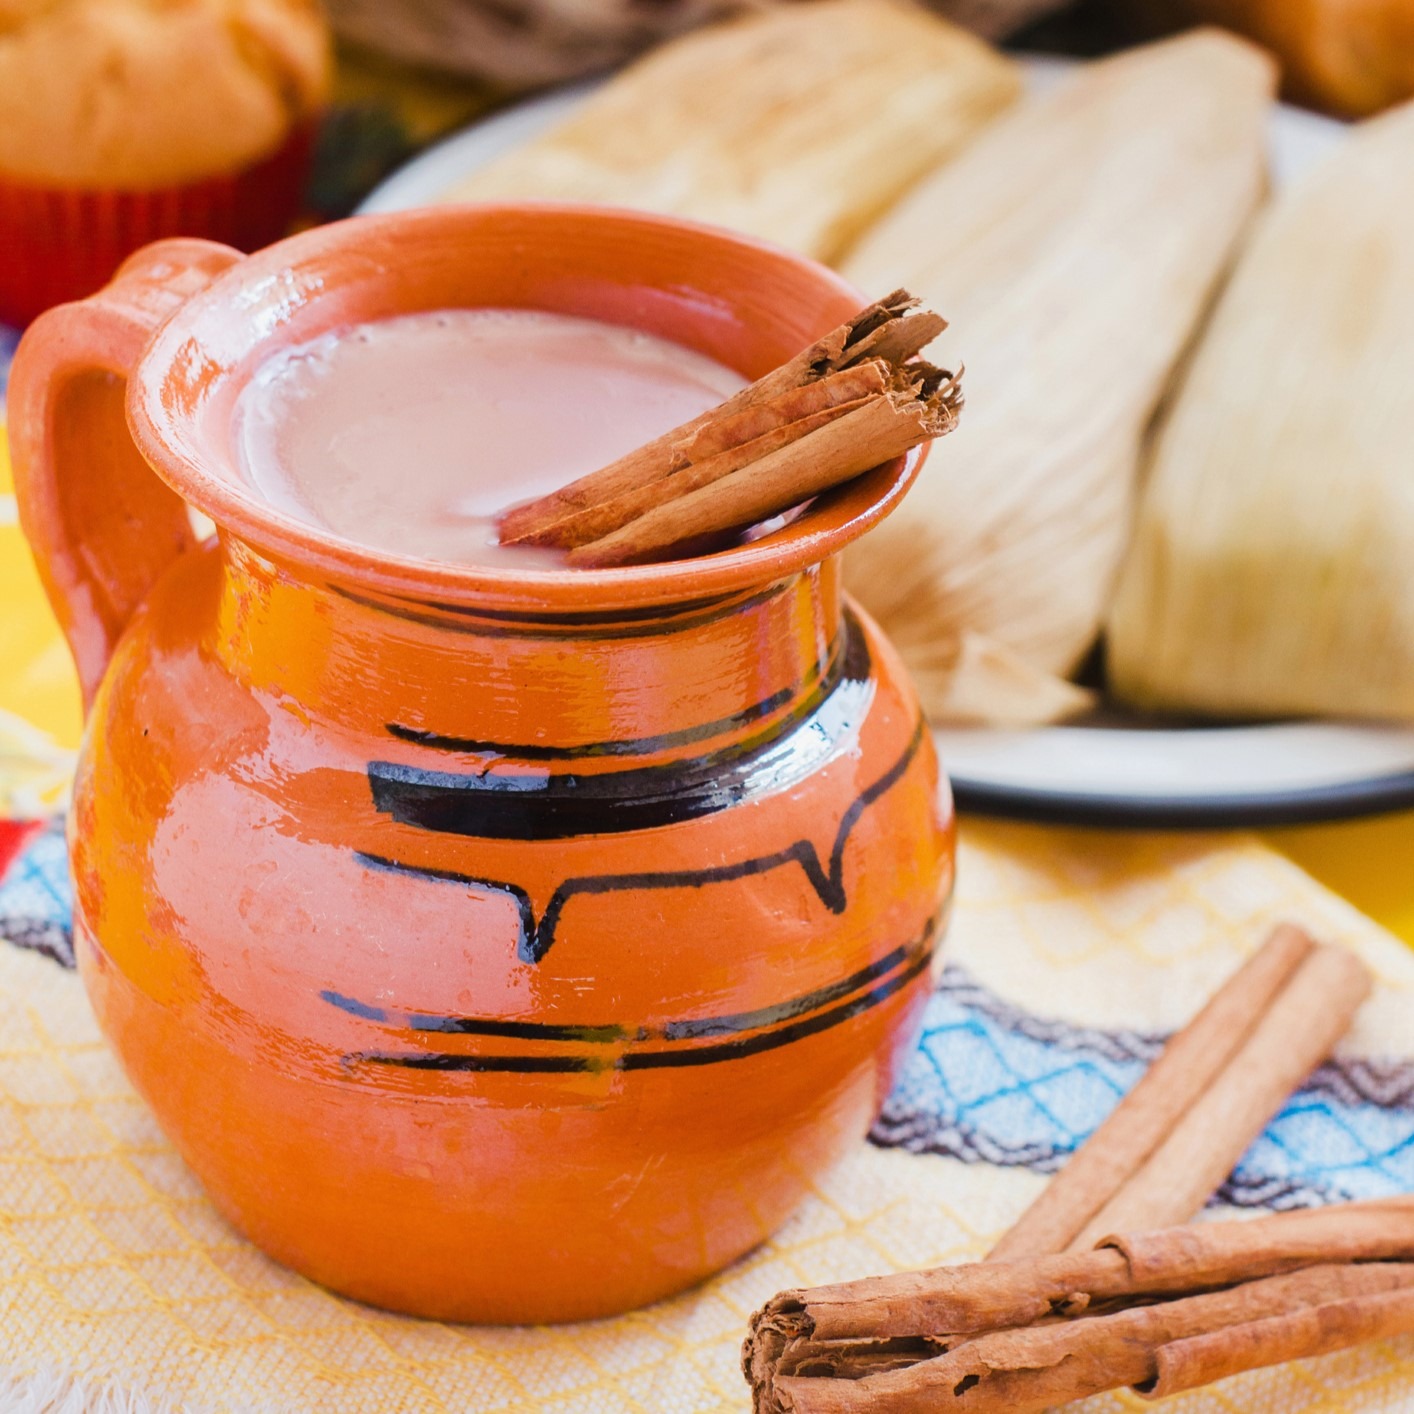 Mexican Atole - orange ceramic mug with cinnamon-cocoa drink. Cinnamon stick garnish and tamales in background.